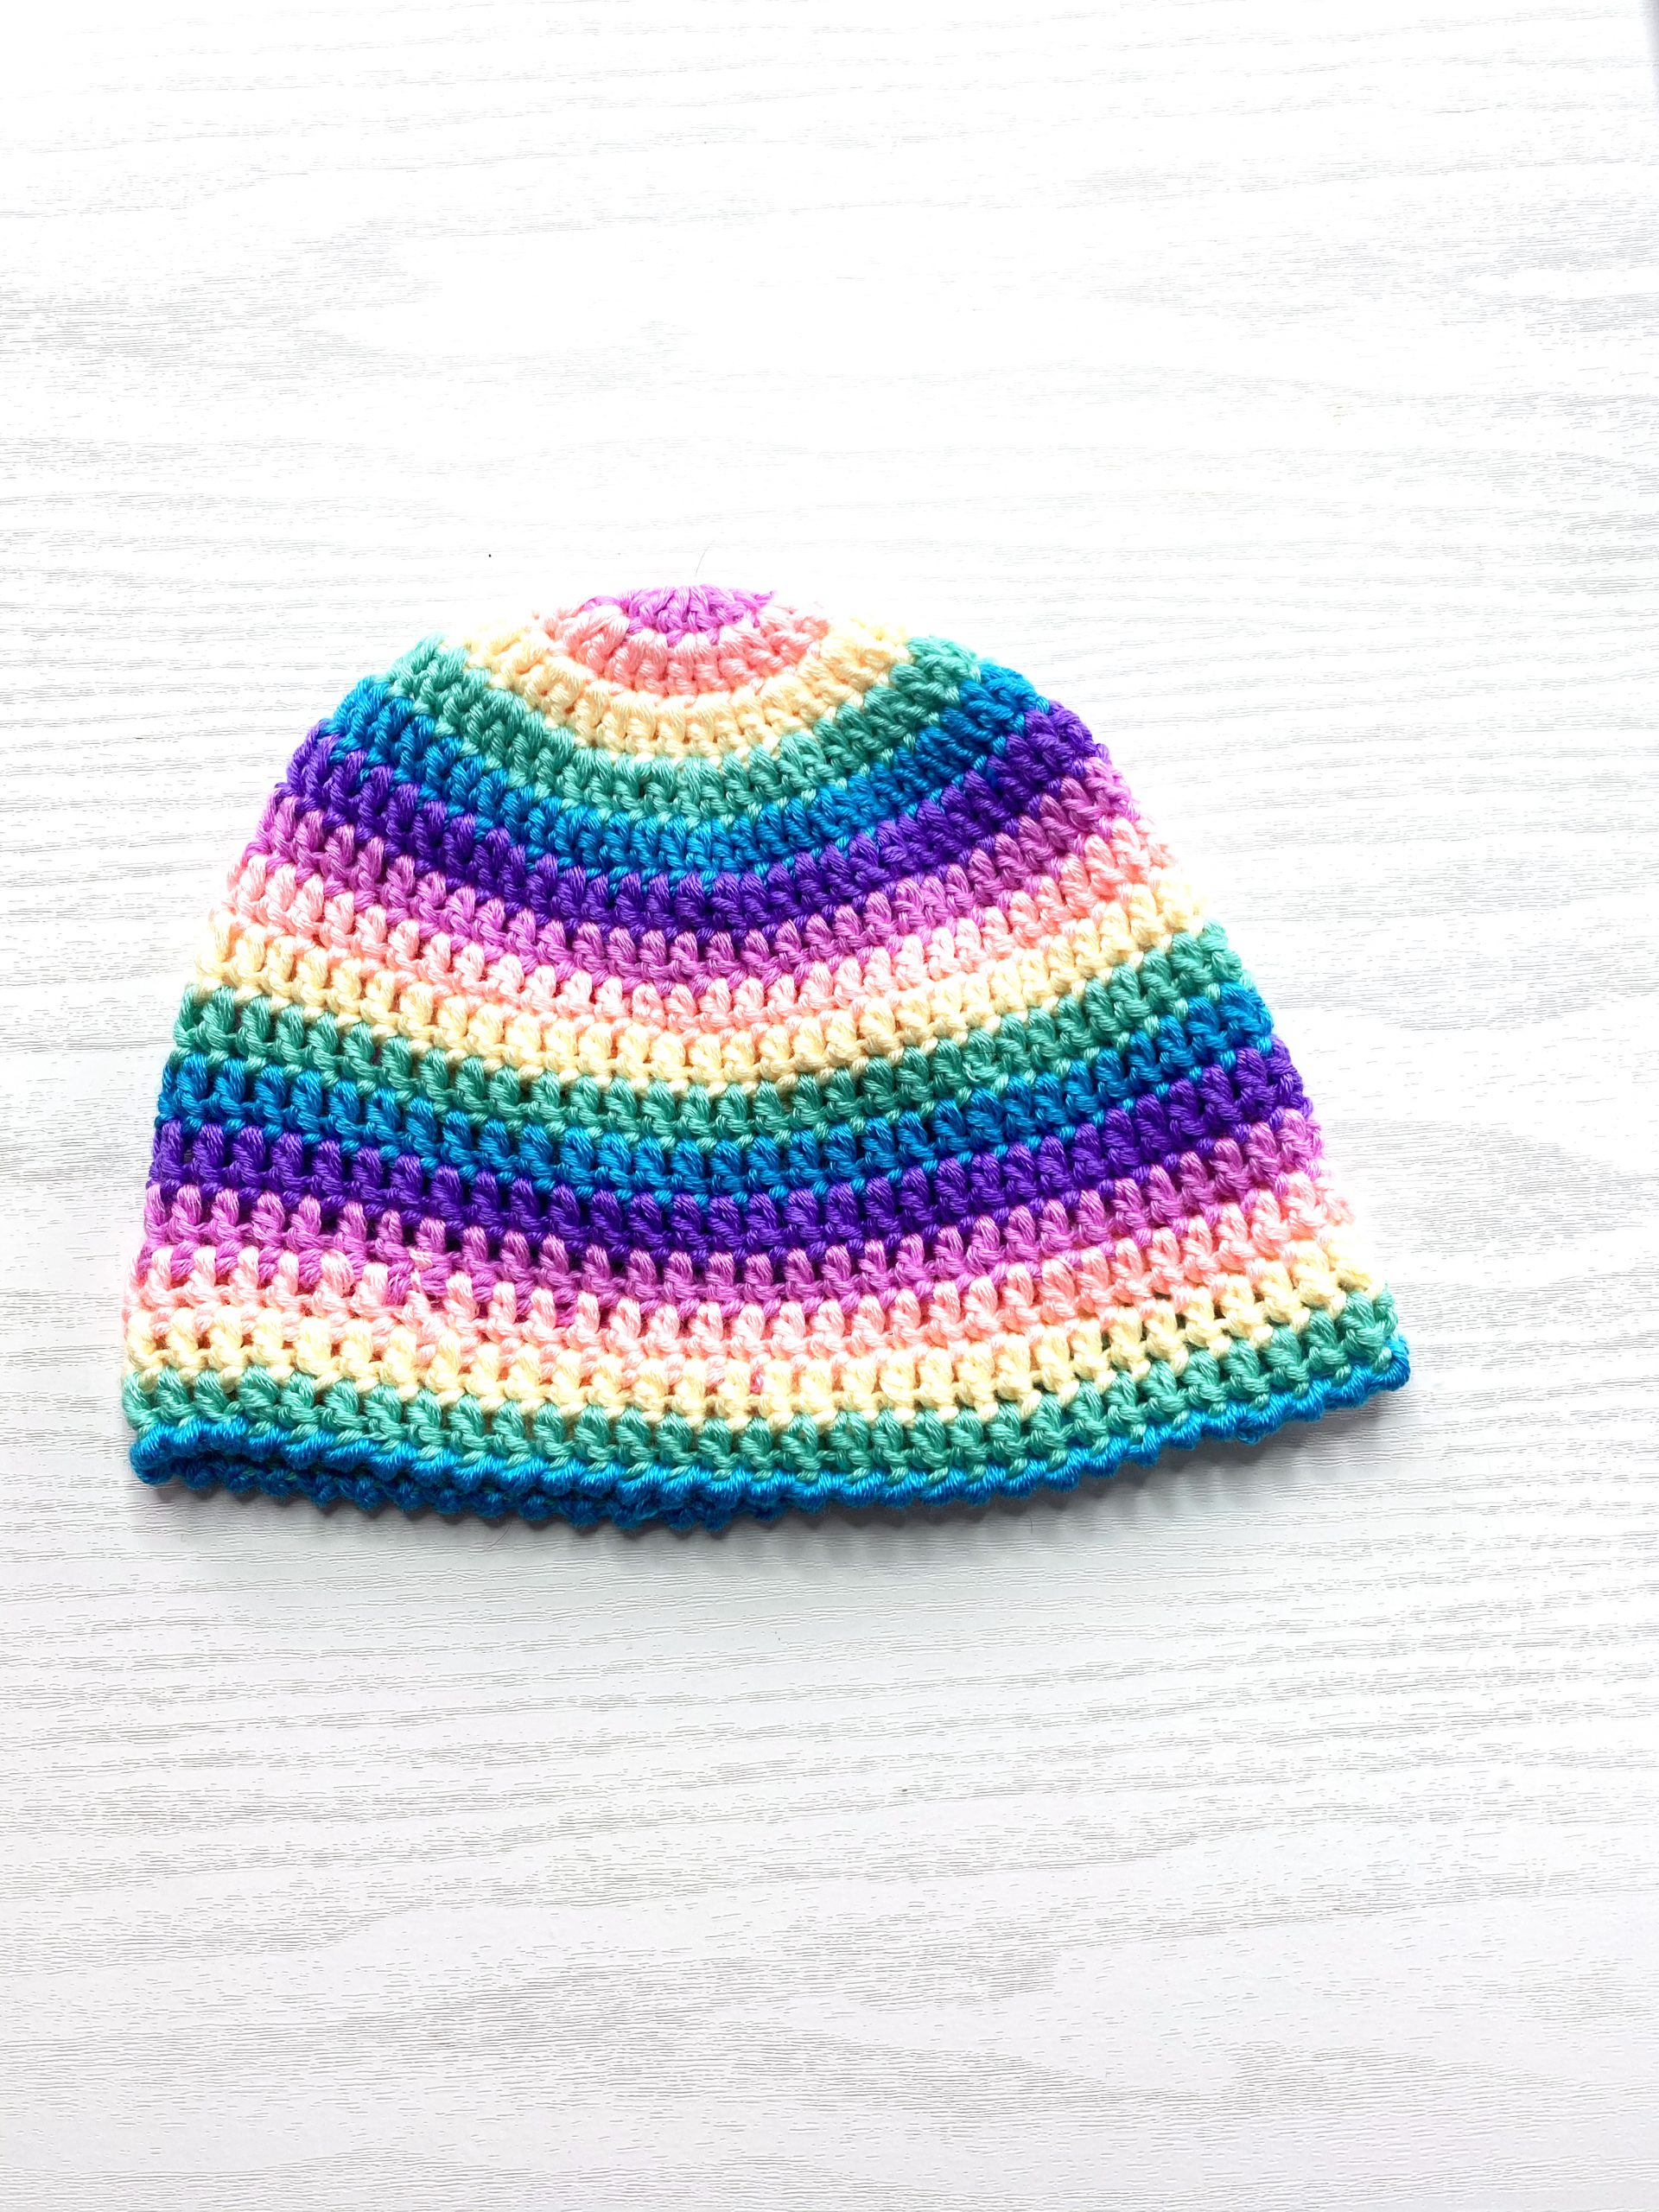 24 Crochet Hats Book Introduction Inclusive Sizes for Men, Women